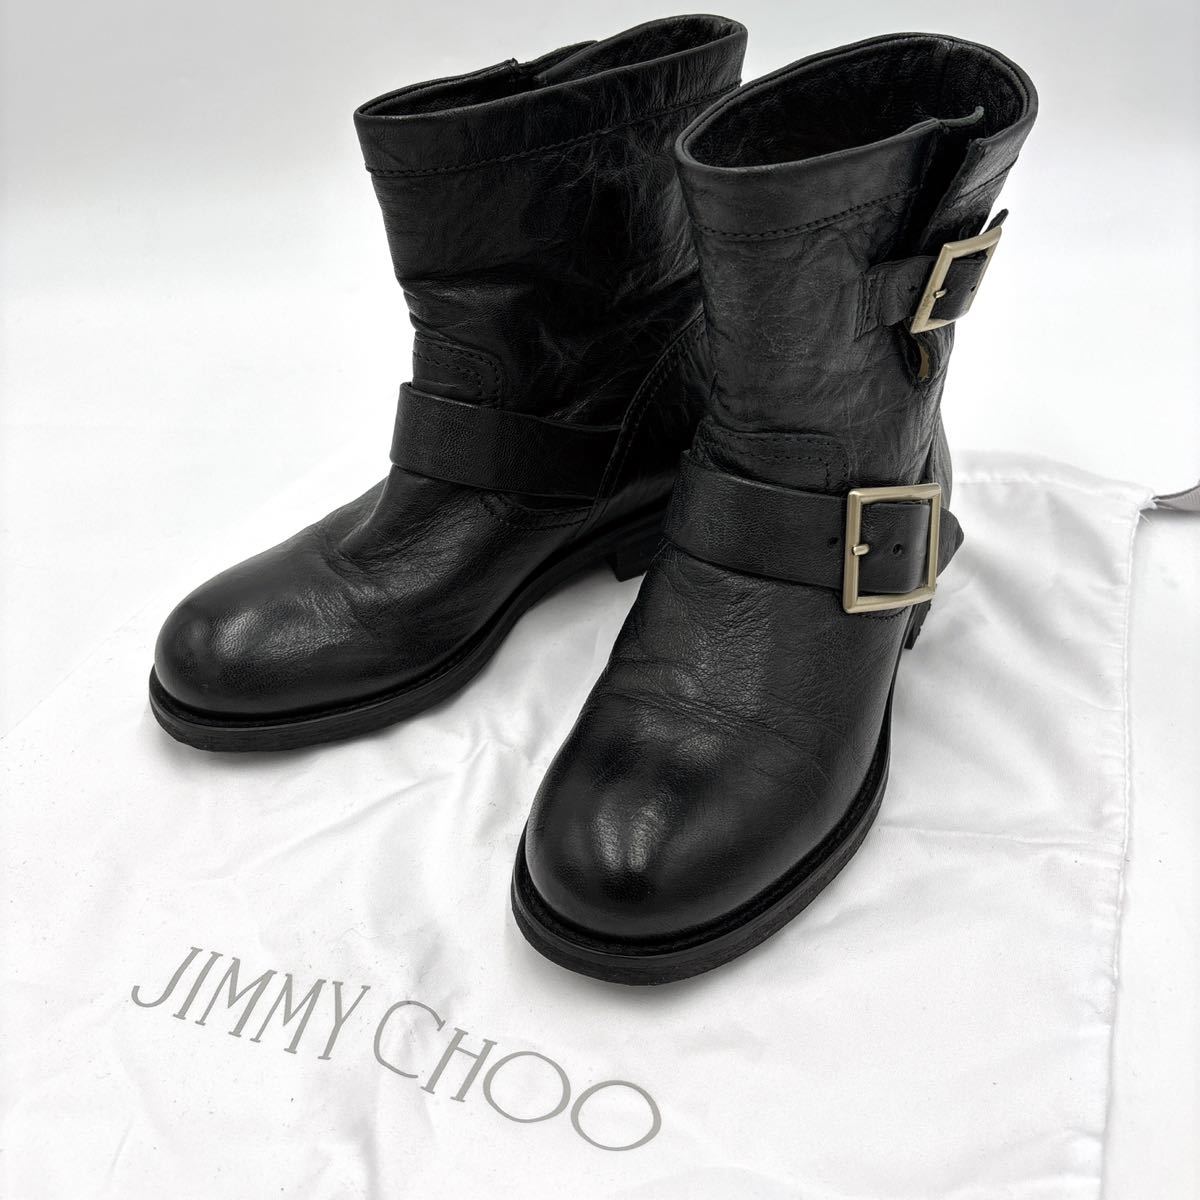 F ＊ 良品 保存袋付き イタリア製 '高級婦人靴' JIMMY CHOO ジミーチュウ 本革 ショート エンジニアブーツ 革靴 EU35 22cm レディース _画像1